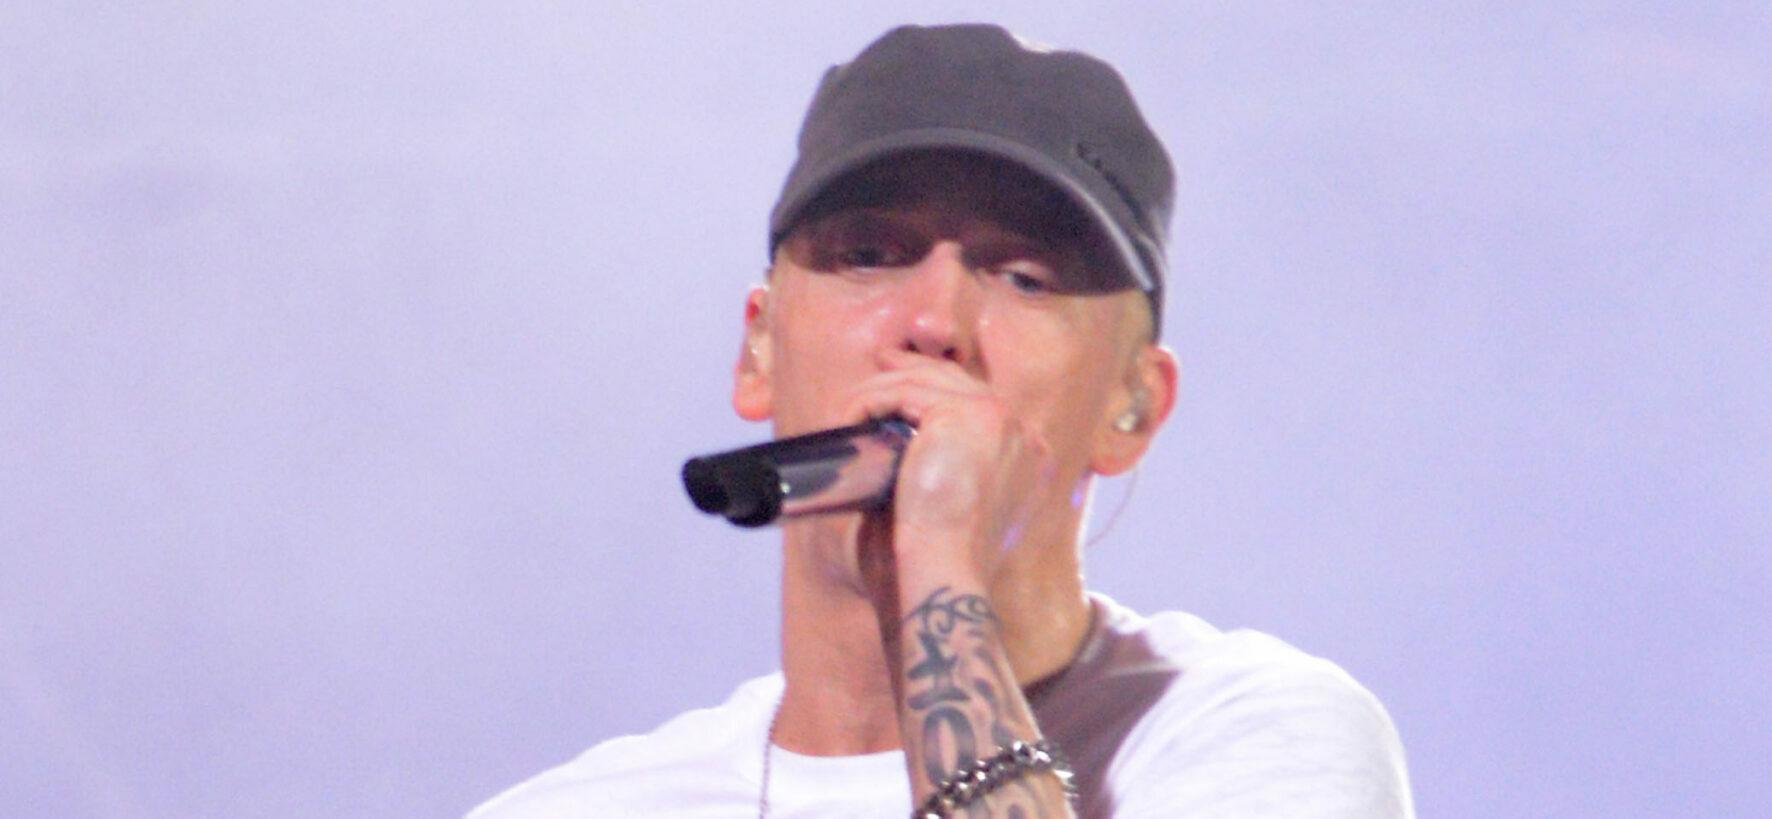 Eminem Files For Protective Order Against ‘RHOP’ Stars Amid Trademark Dispute Case